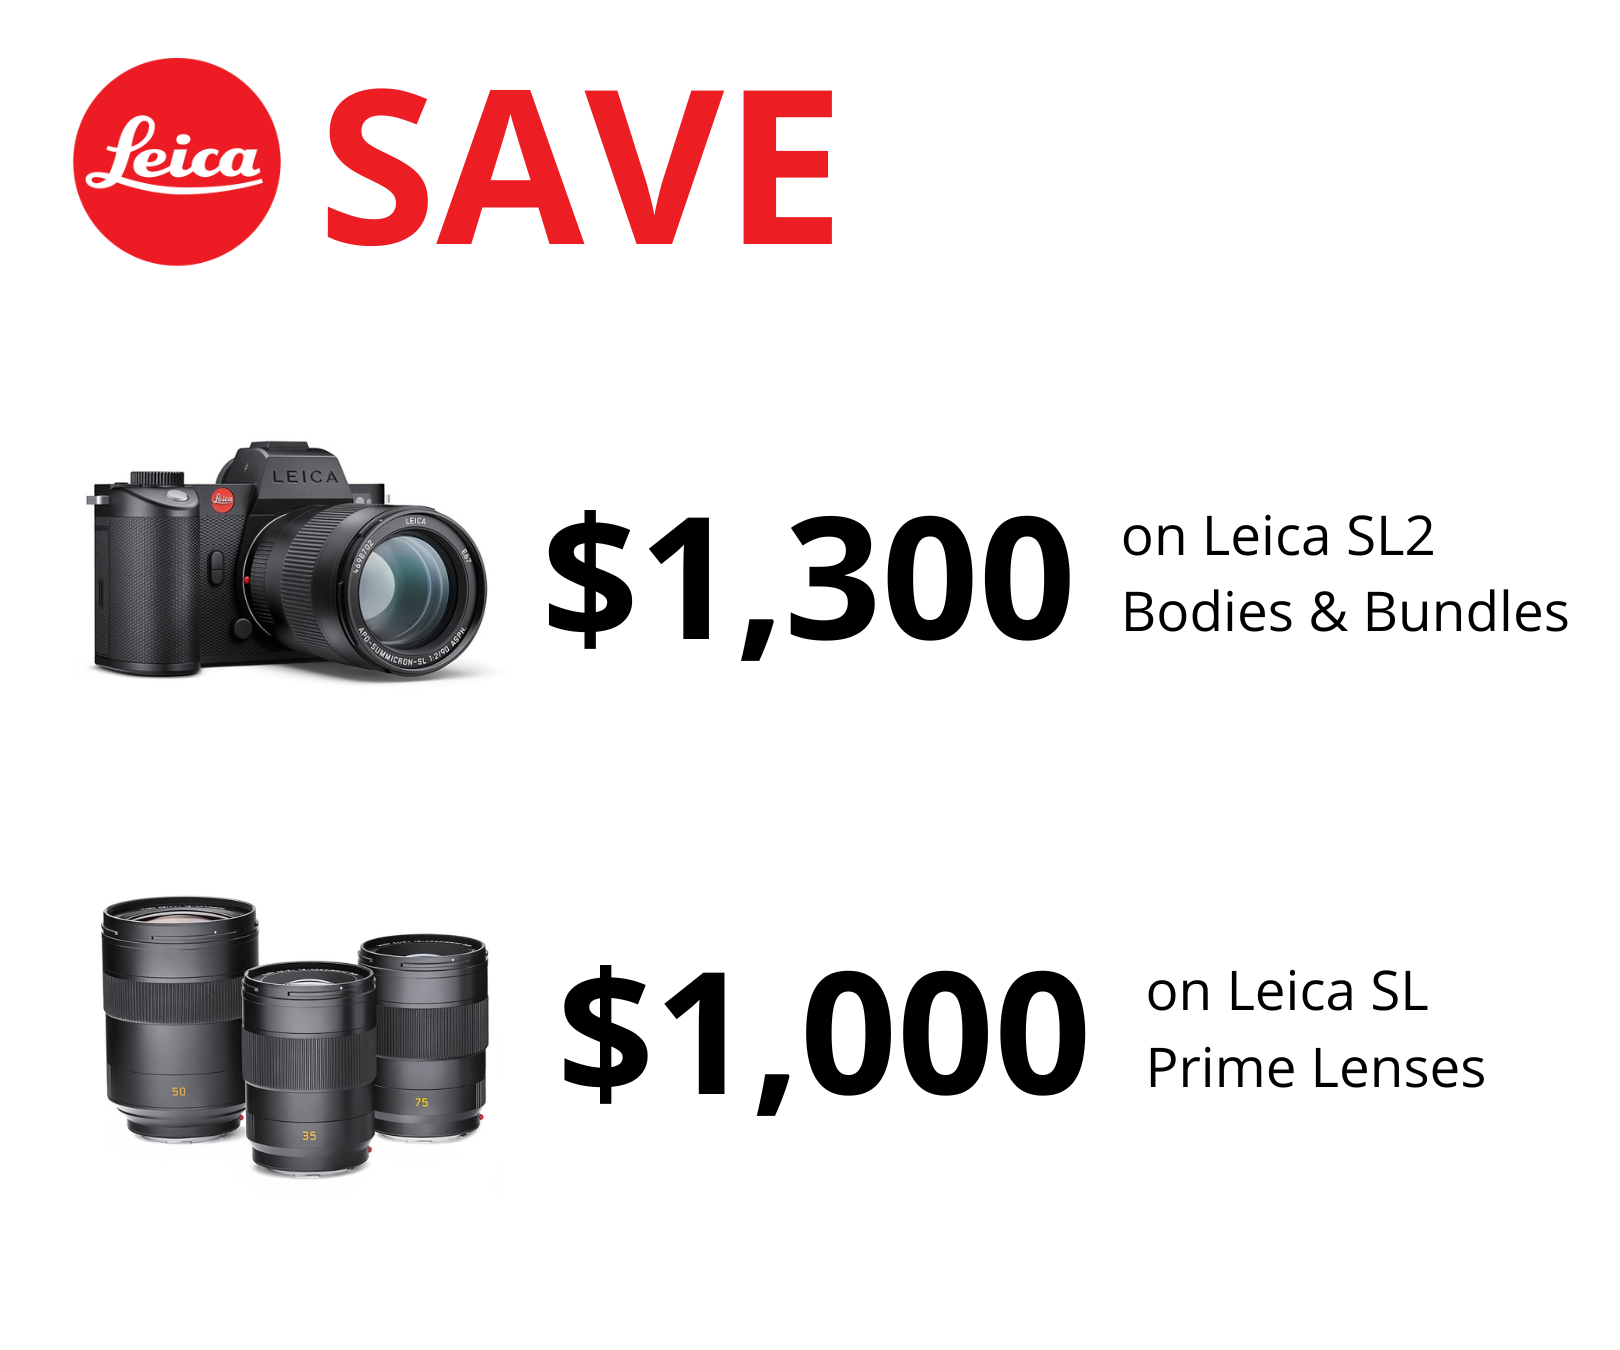 save-on-leica-sl2-camera-bodies-prime-lenses-bundles-2022-deal